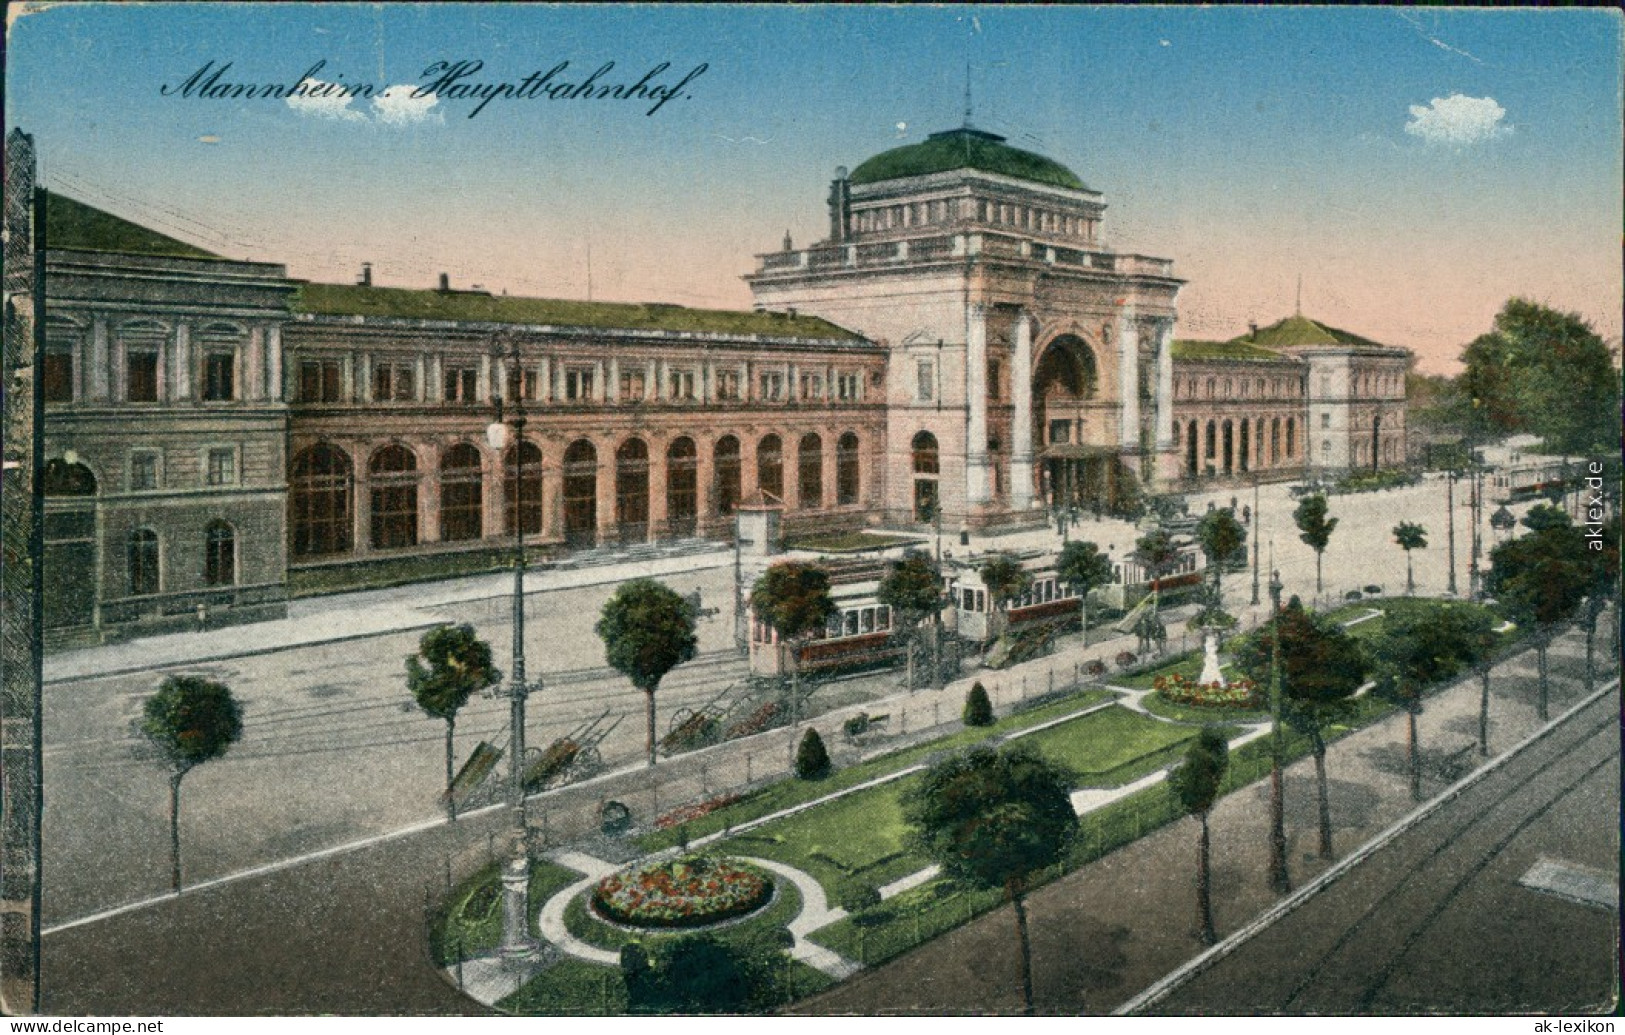 Ansichtskarte Mannheim Hauptbahnhof 1914 - Mannheim